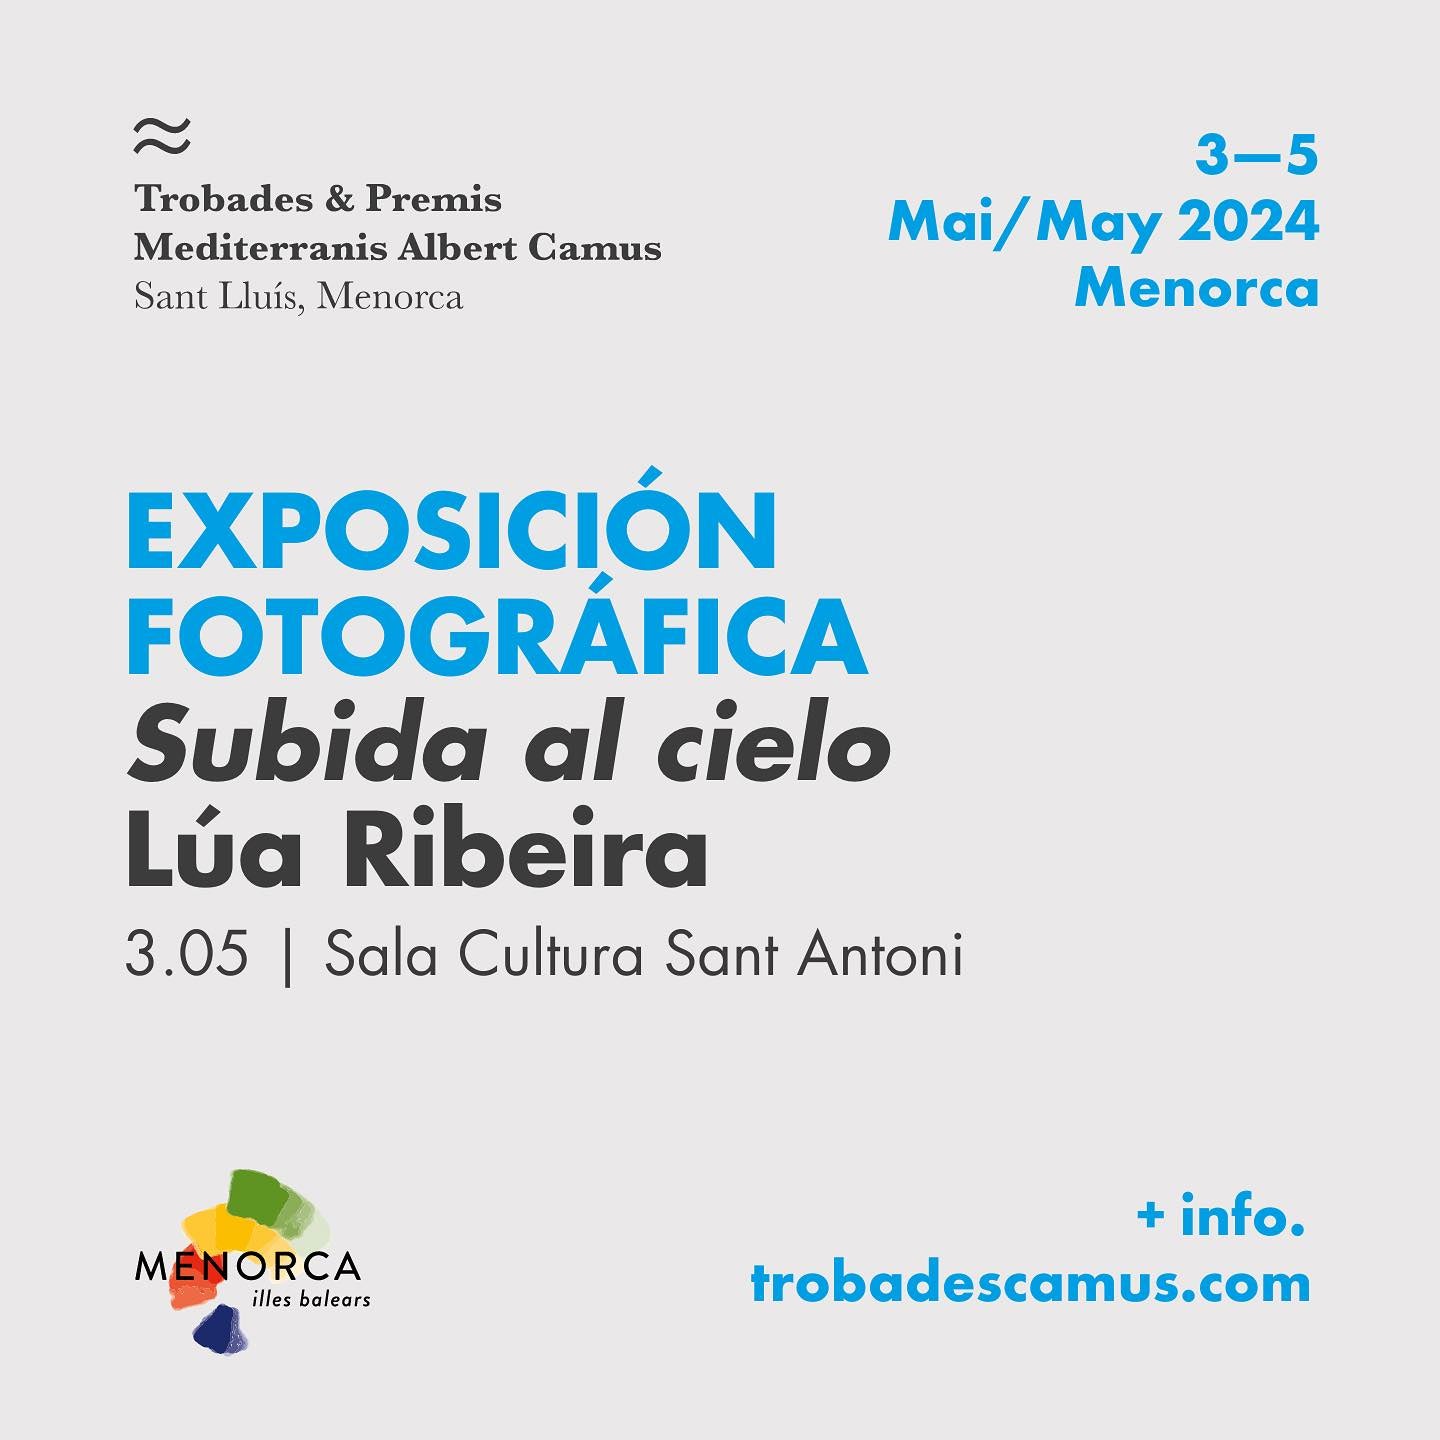 Exhibition ‘Subida al cielo’ by Lúa Ribeira at Trobades Camus, Menorca, 3—28 April 2024